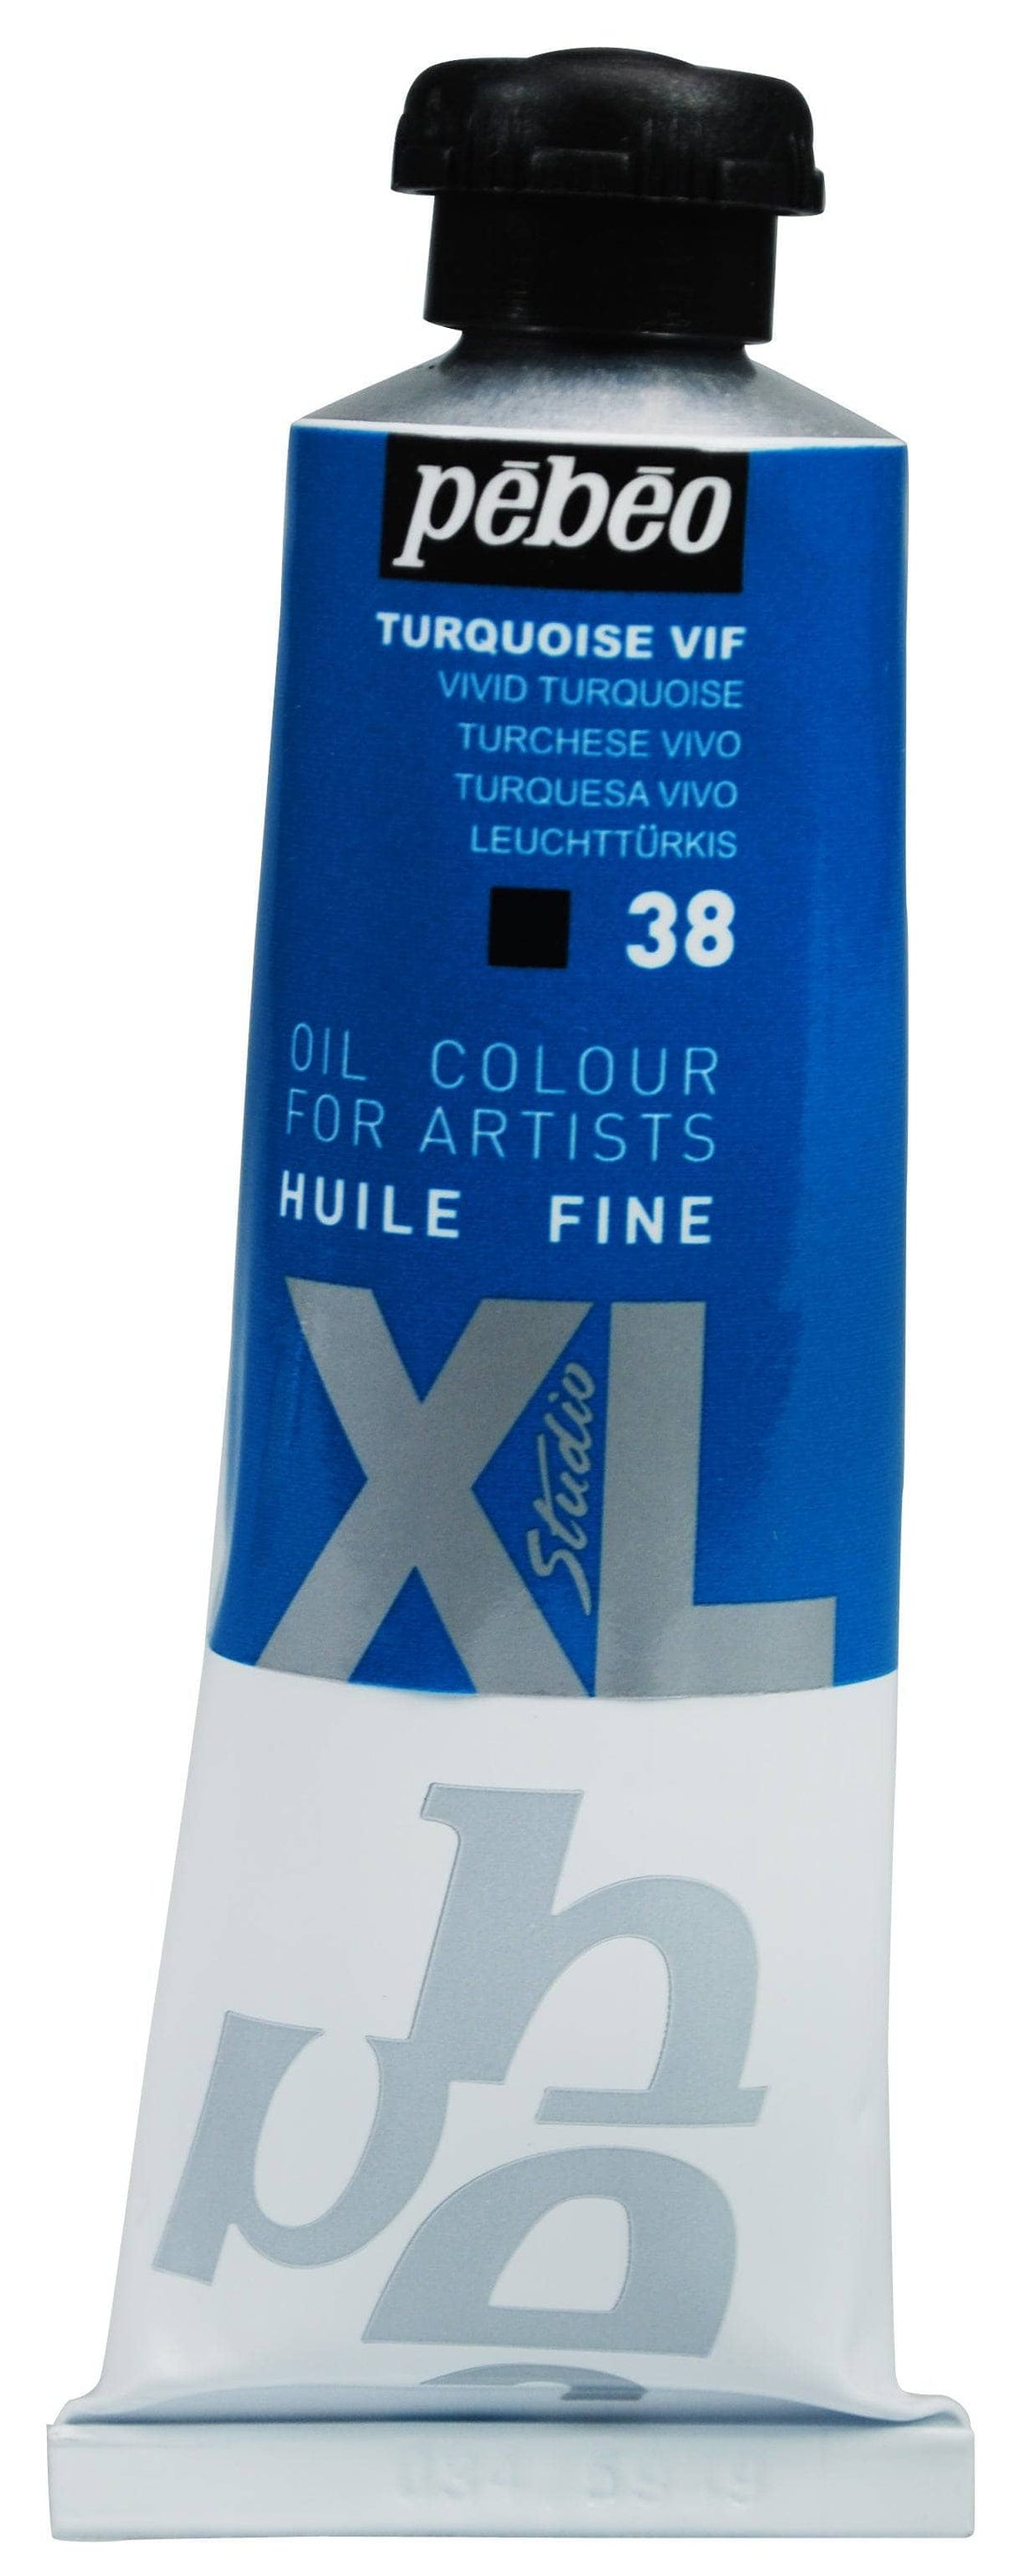 Huile fine Studio XL 37ml - Turquoise Vif
PB937038